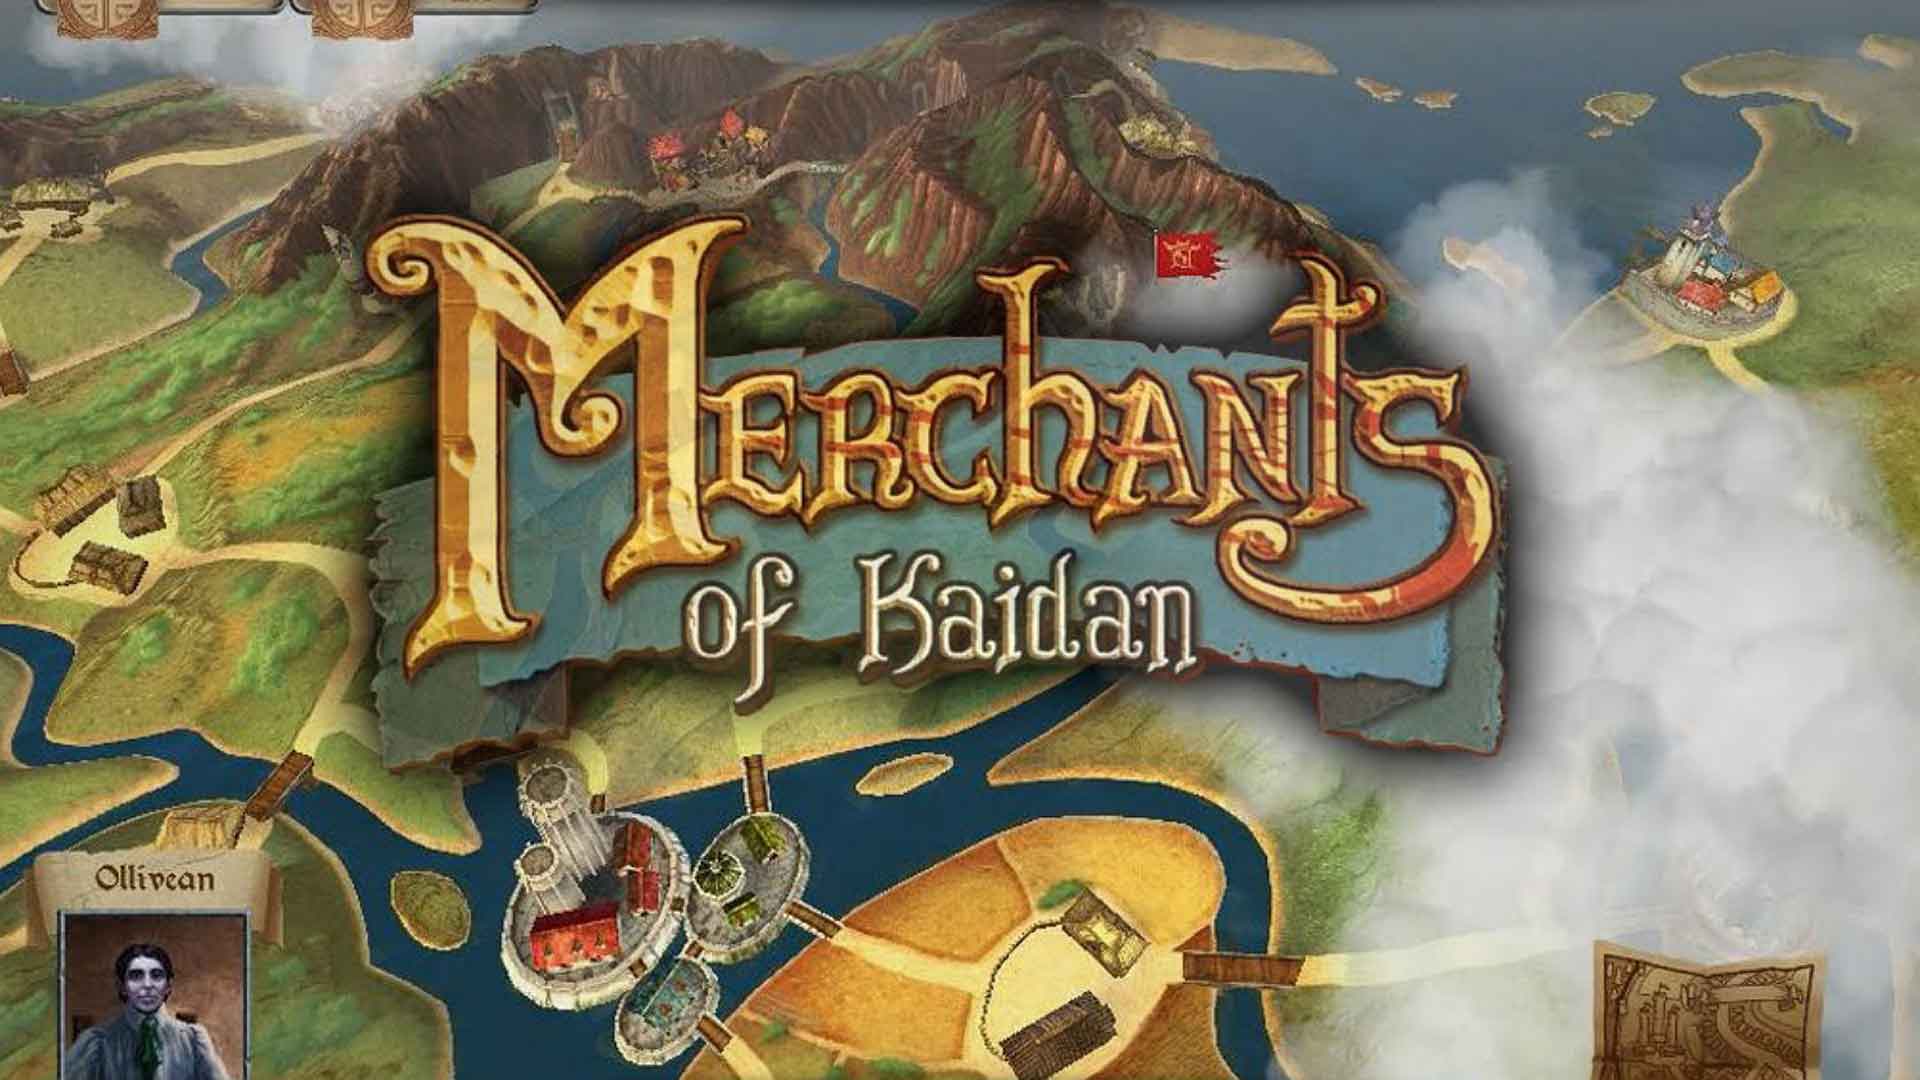 merchants of kaidan